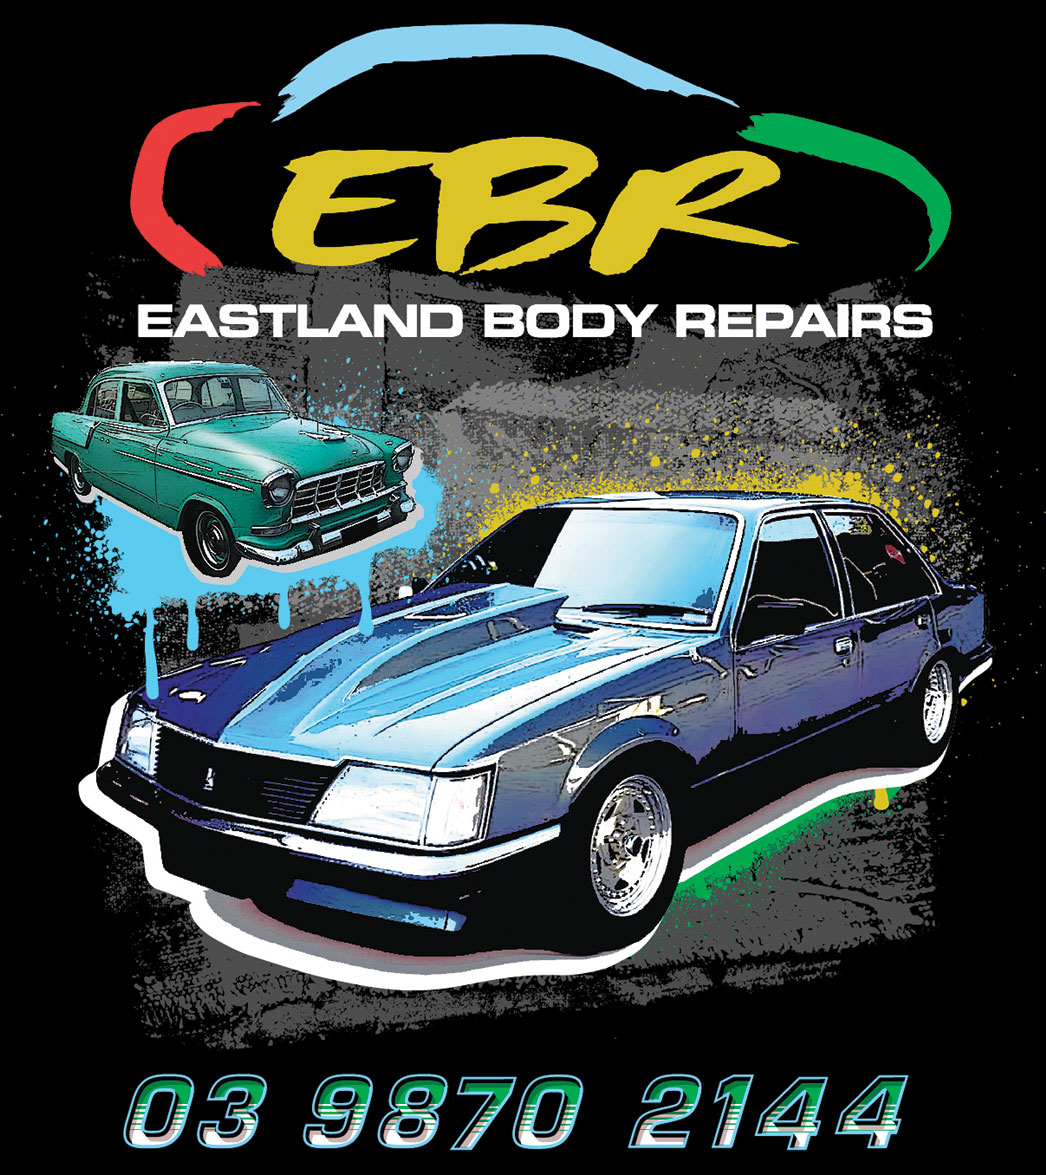 Eastland Body Repairs